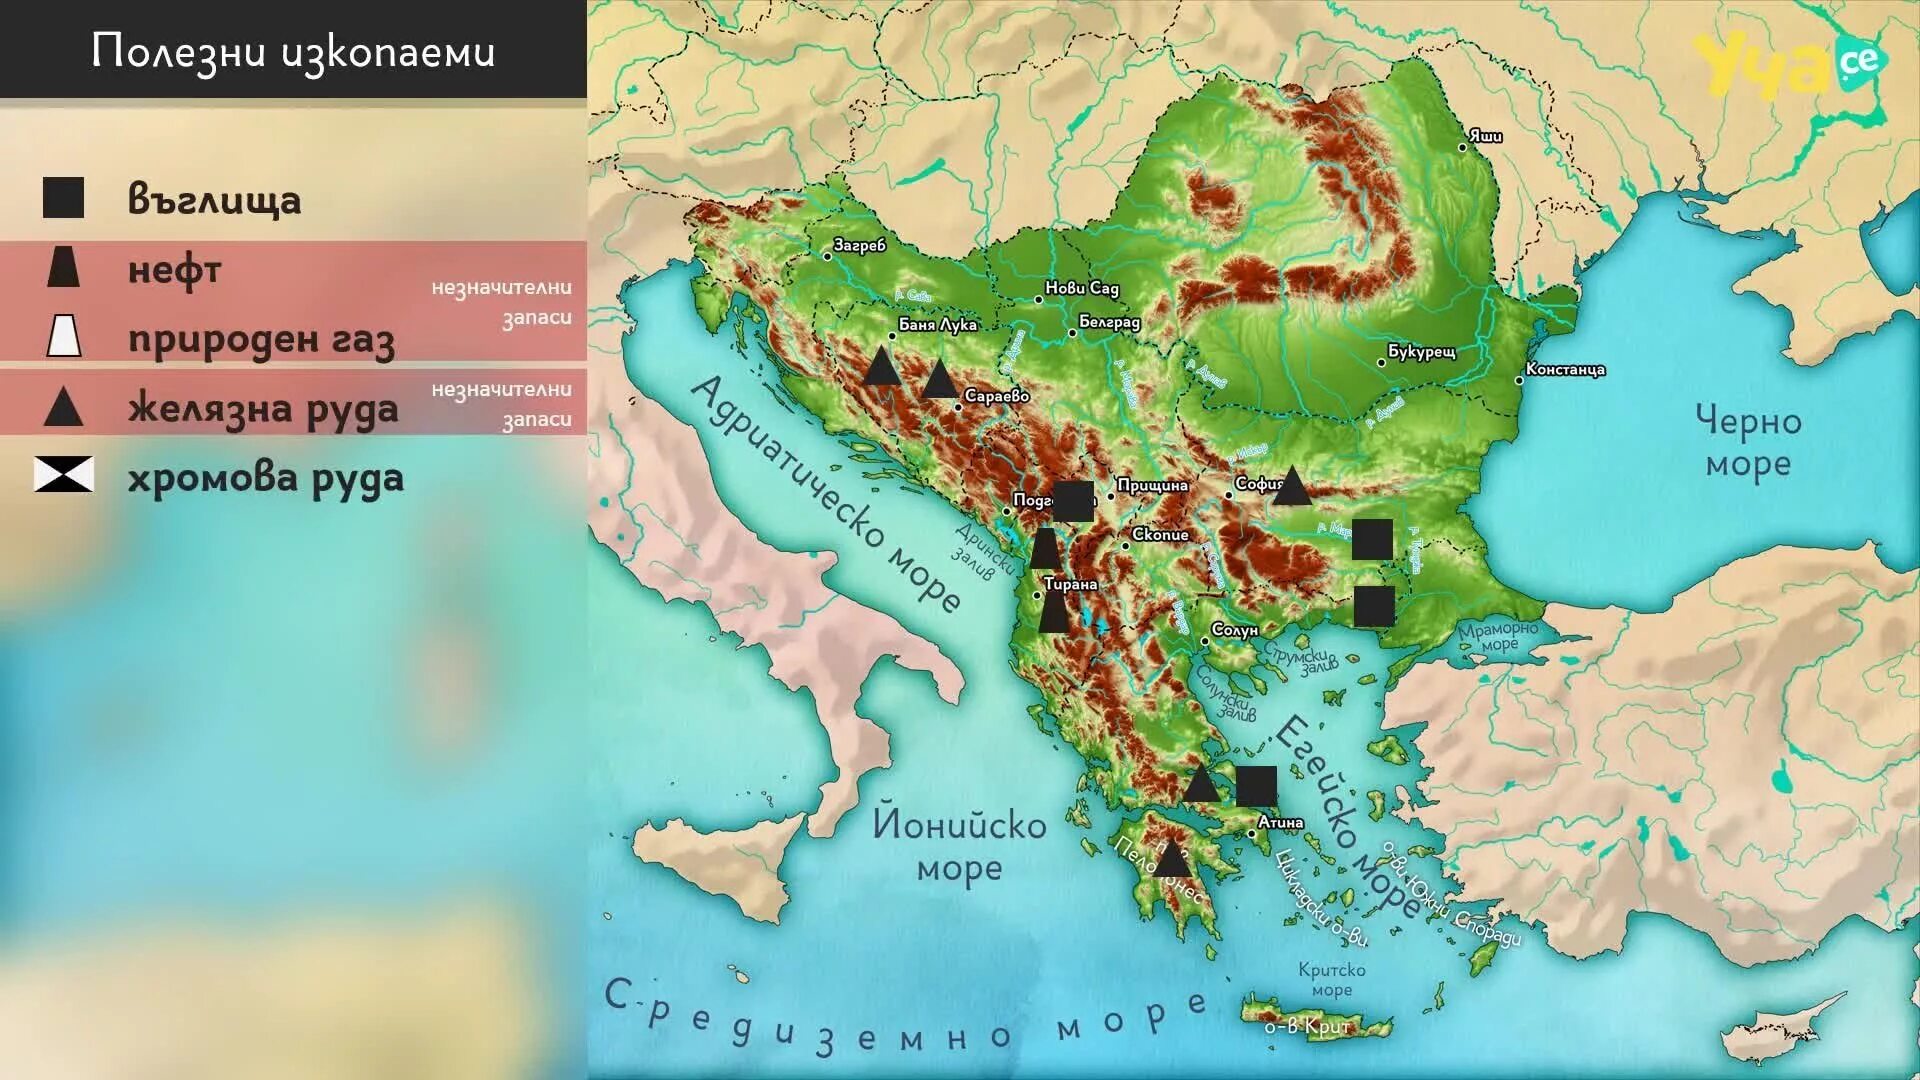 Балканский п-ов на карте. Греция Балканский полуостров. Карта рельефа Балкан. Италия на Балканском полуострове.